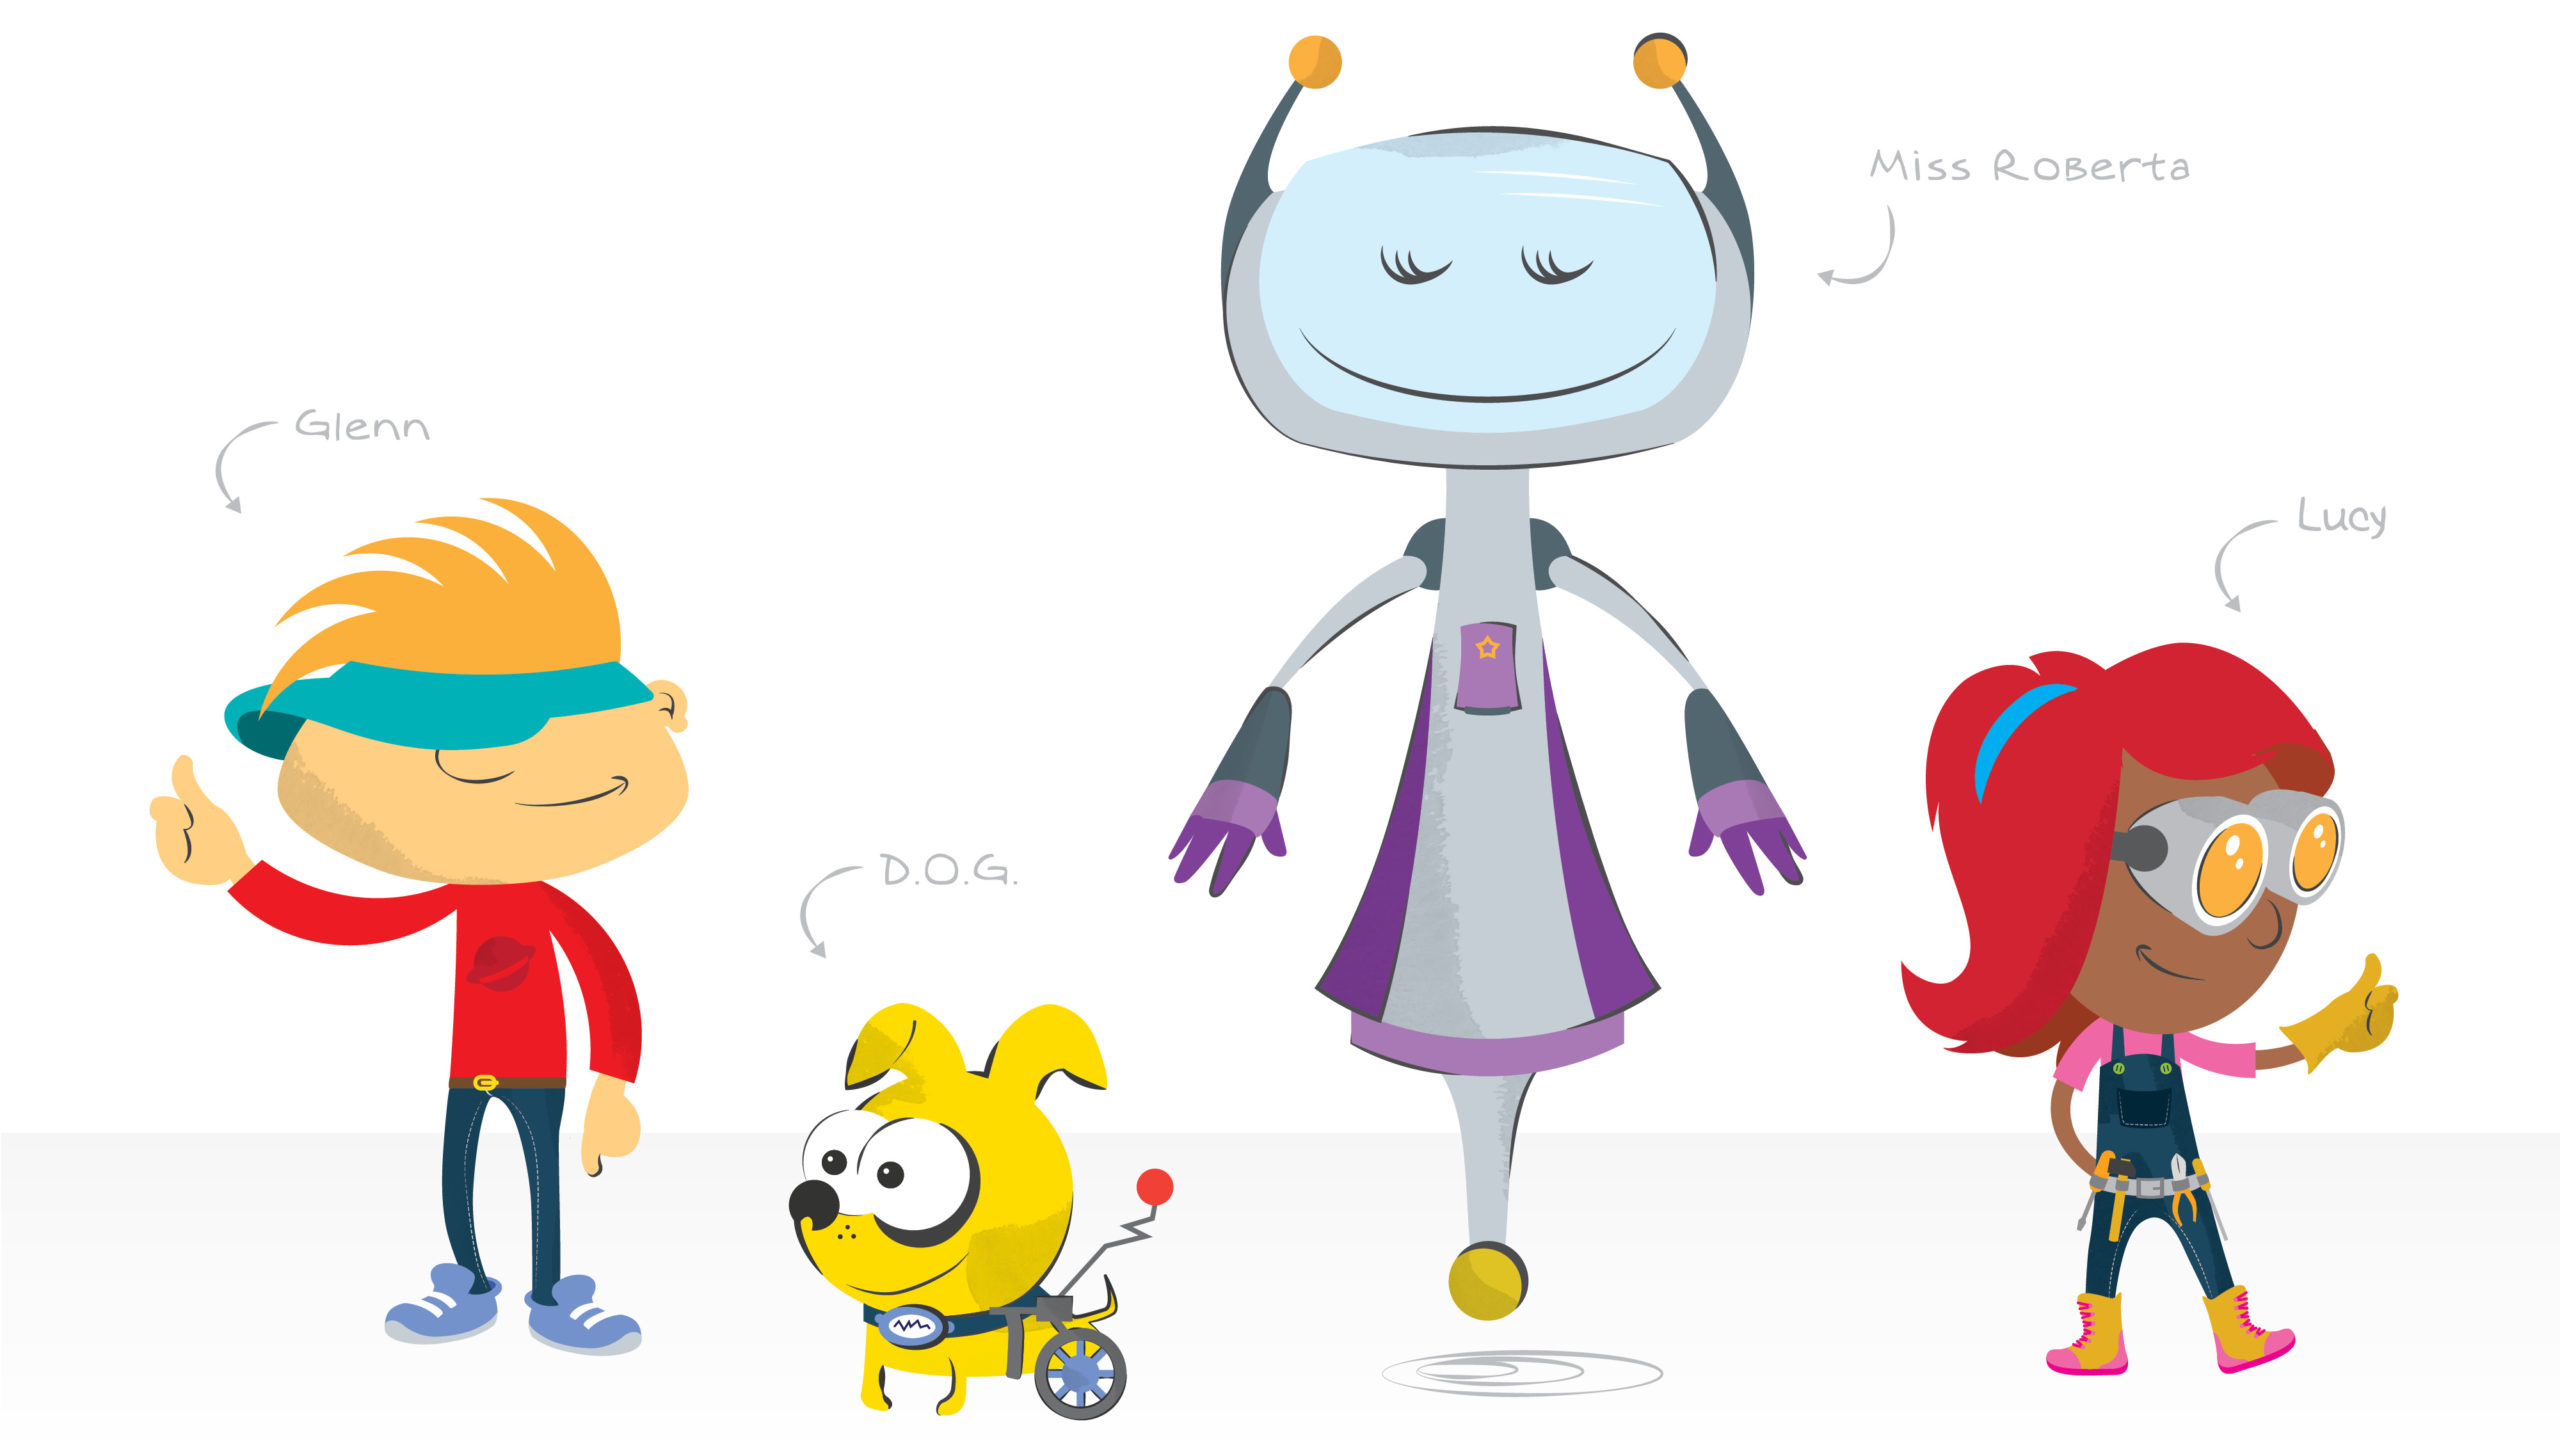 Cartoon drawing of boy, dog, robot, and girl